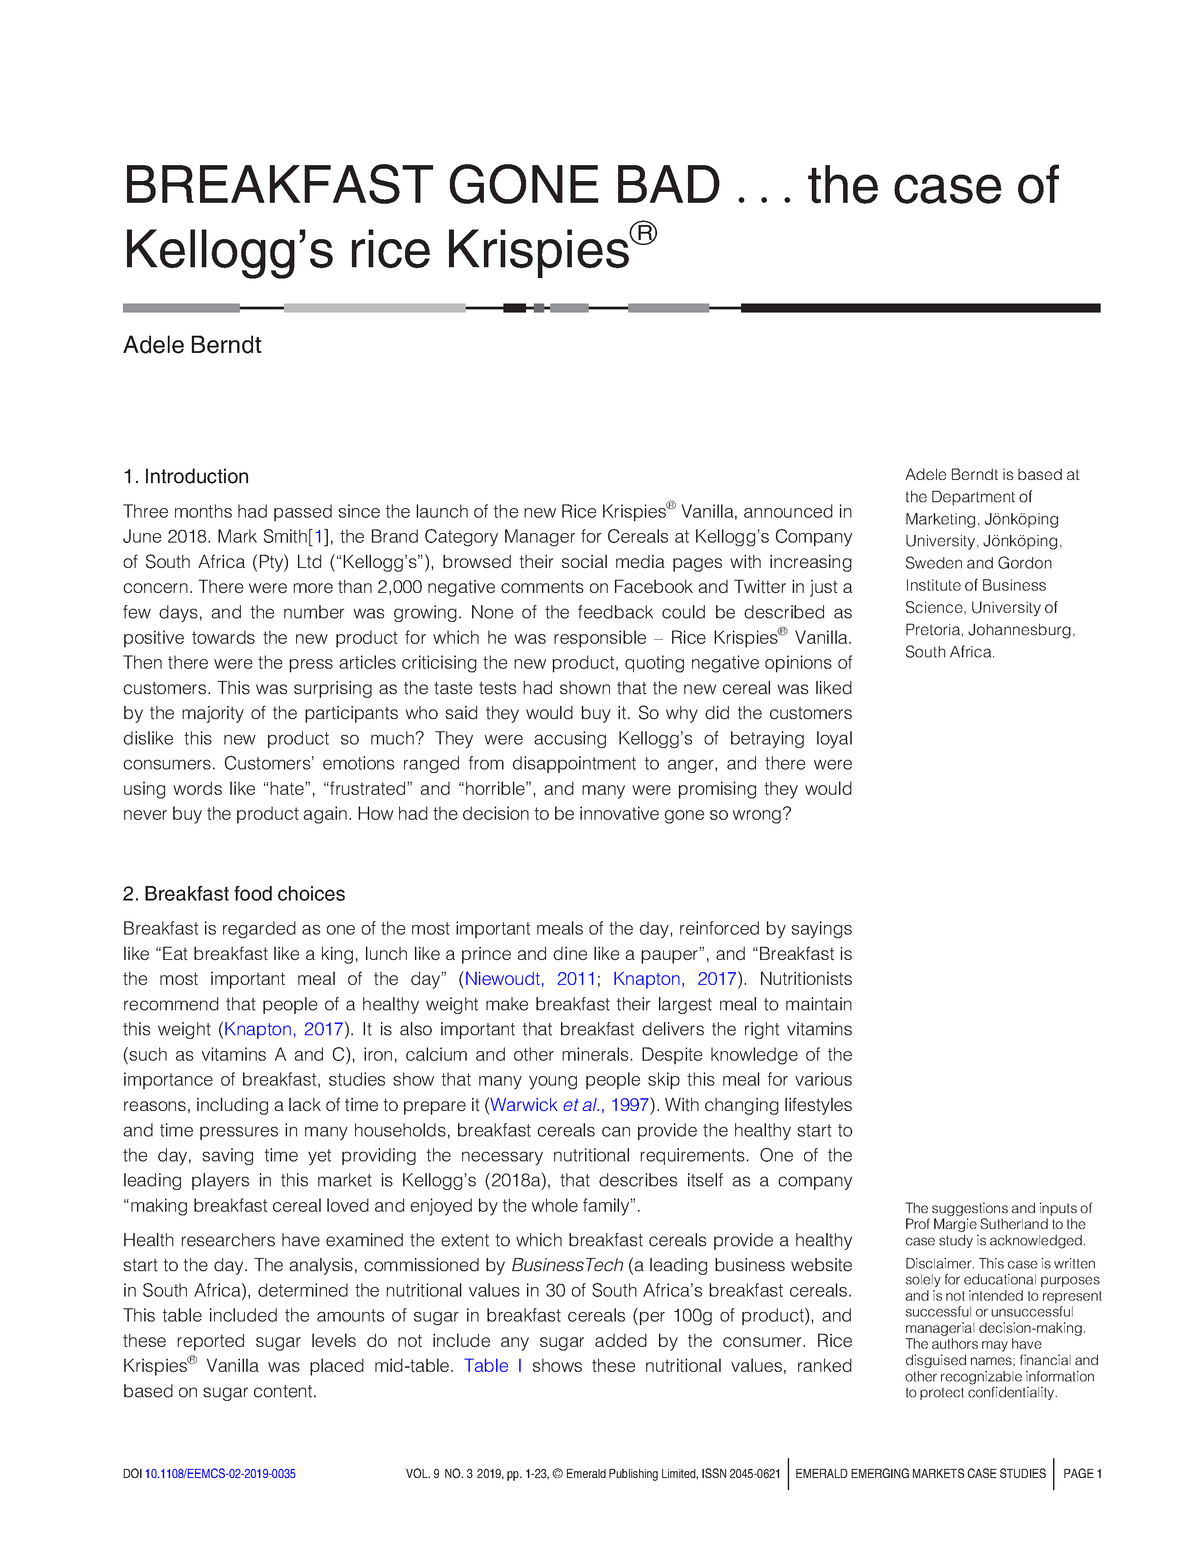 kellogg's case study answers